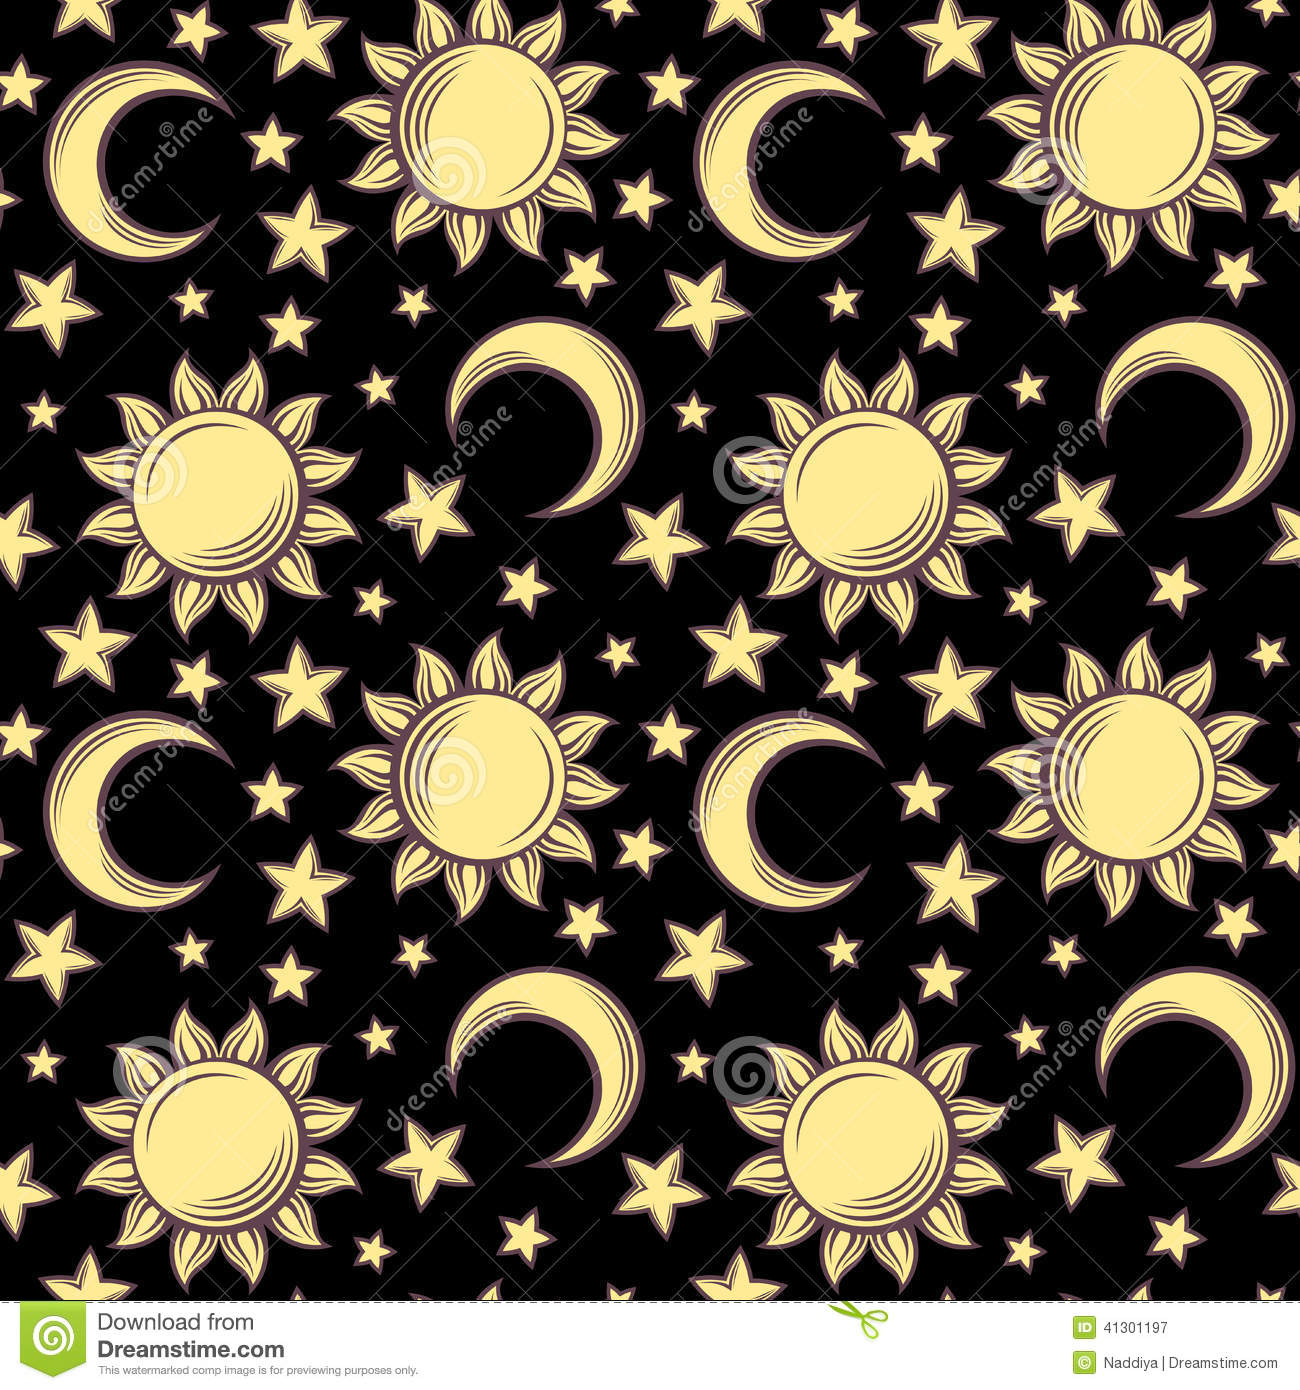 43 Celestial Sun and Moon Wallpaper  WallpaperSafari